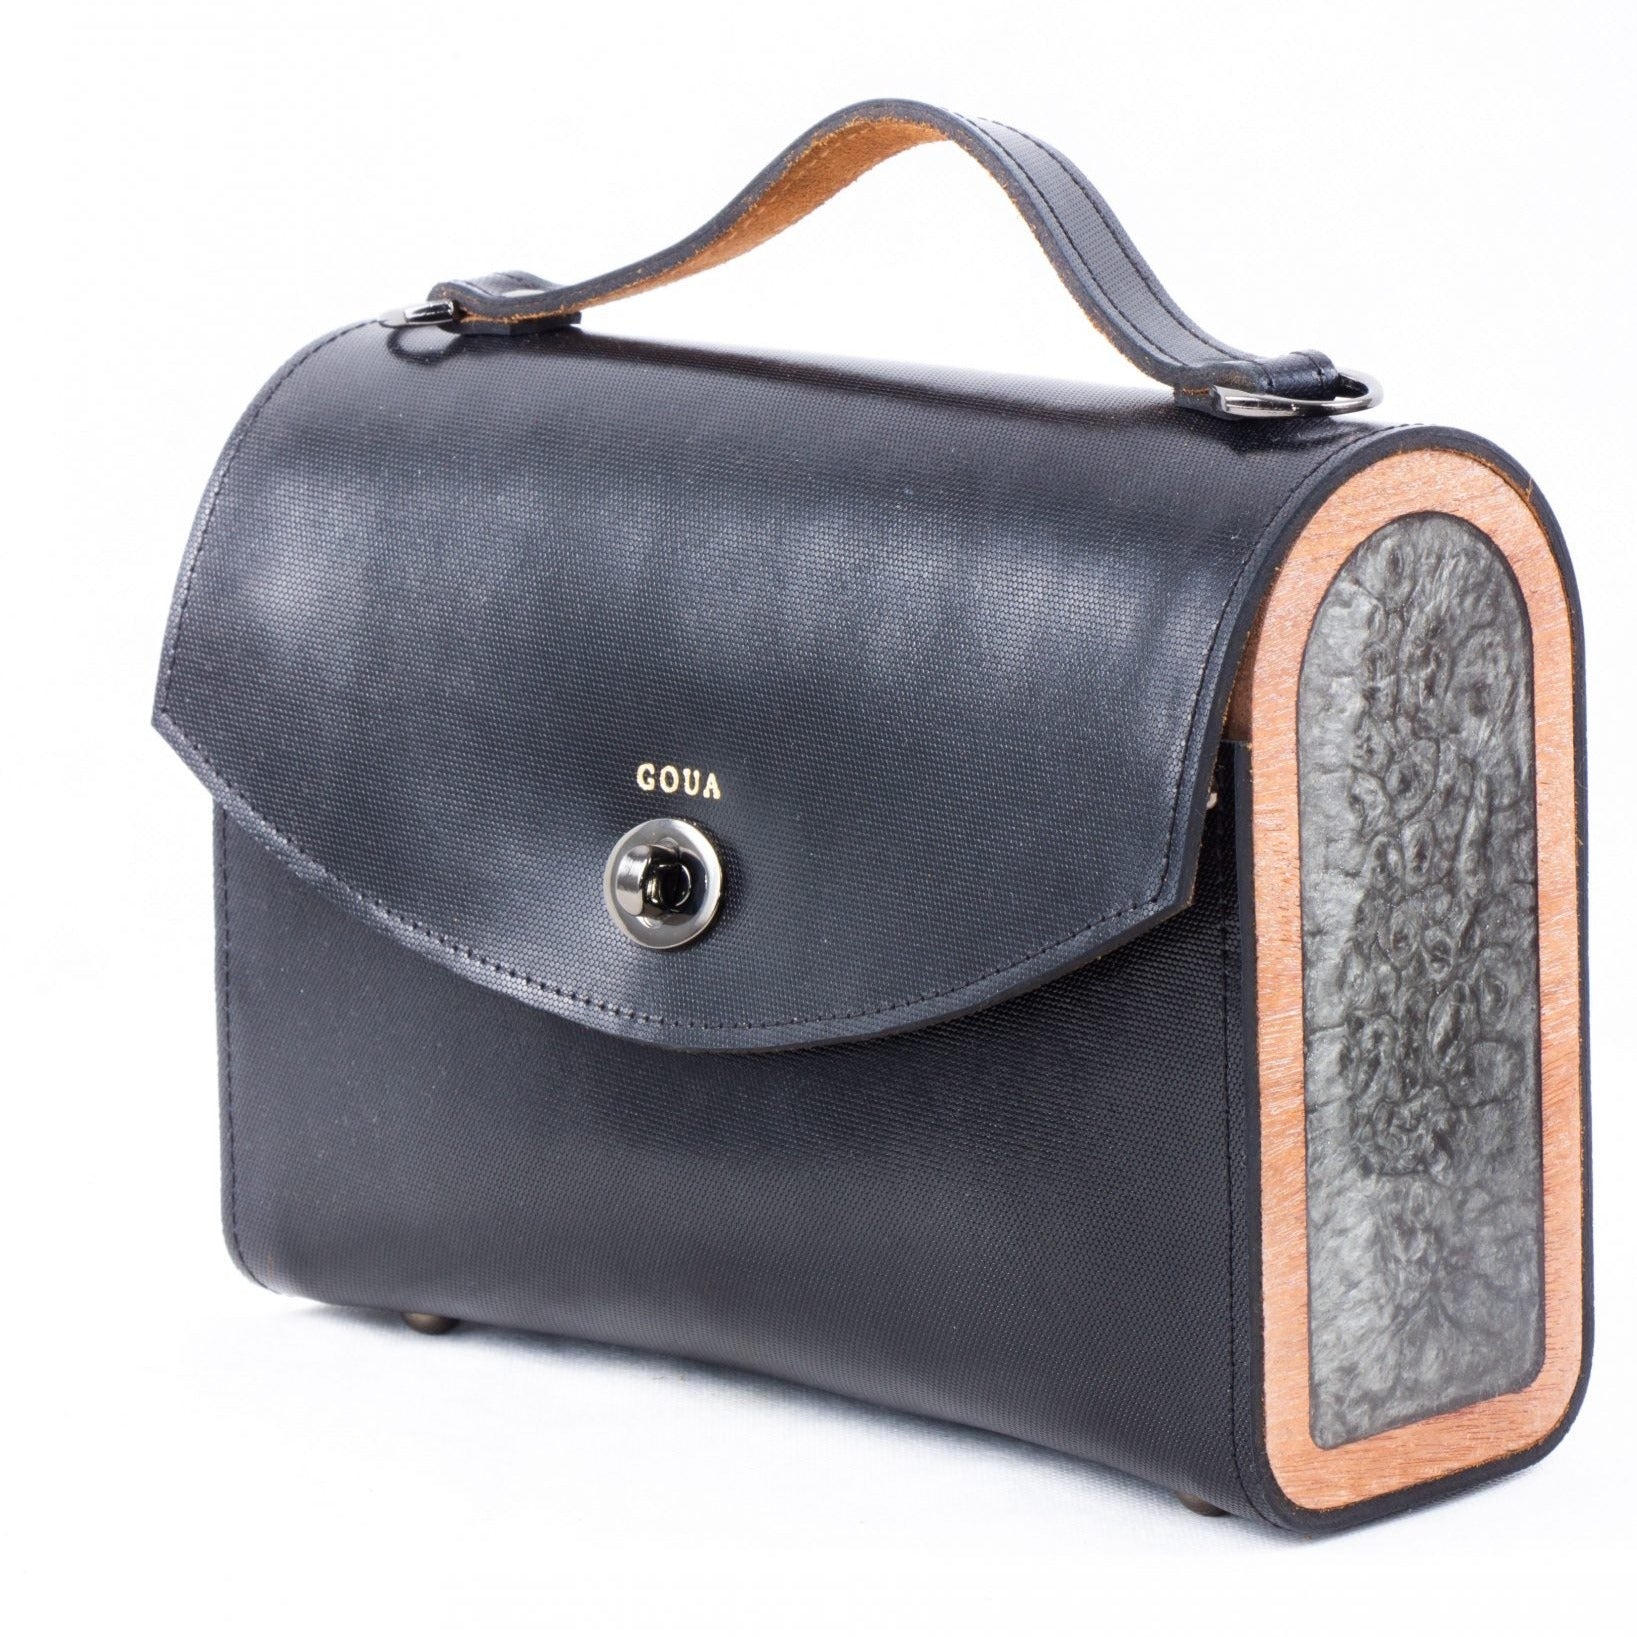 Black handbag in real leather and mahogany wood